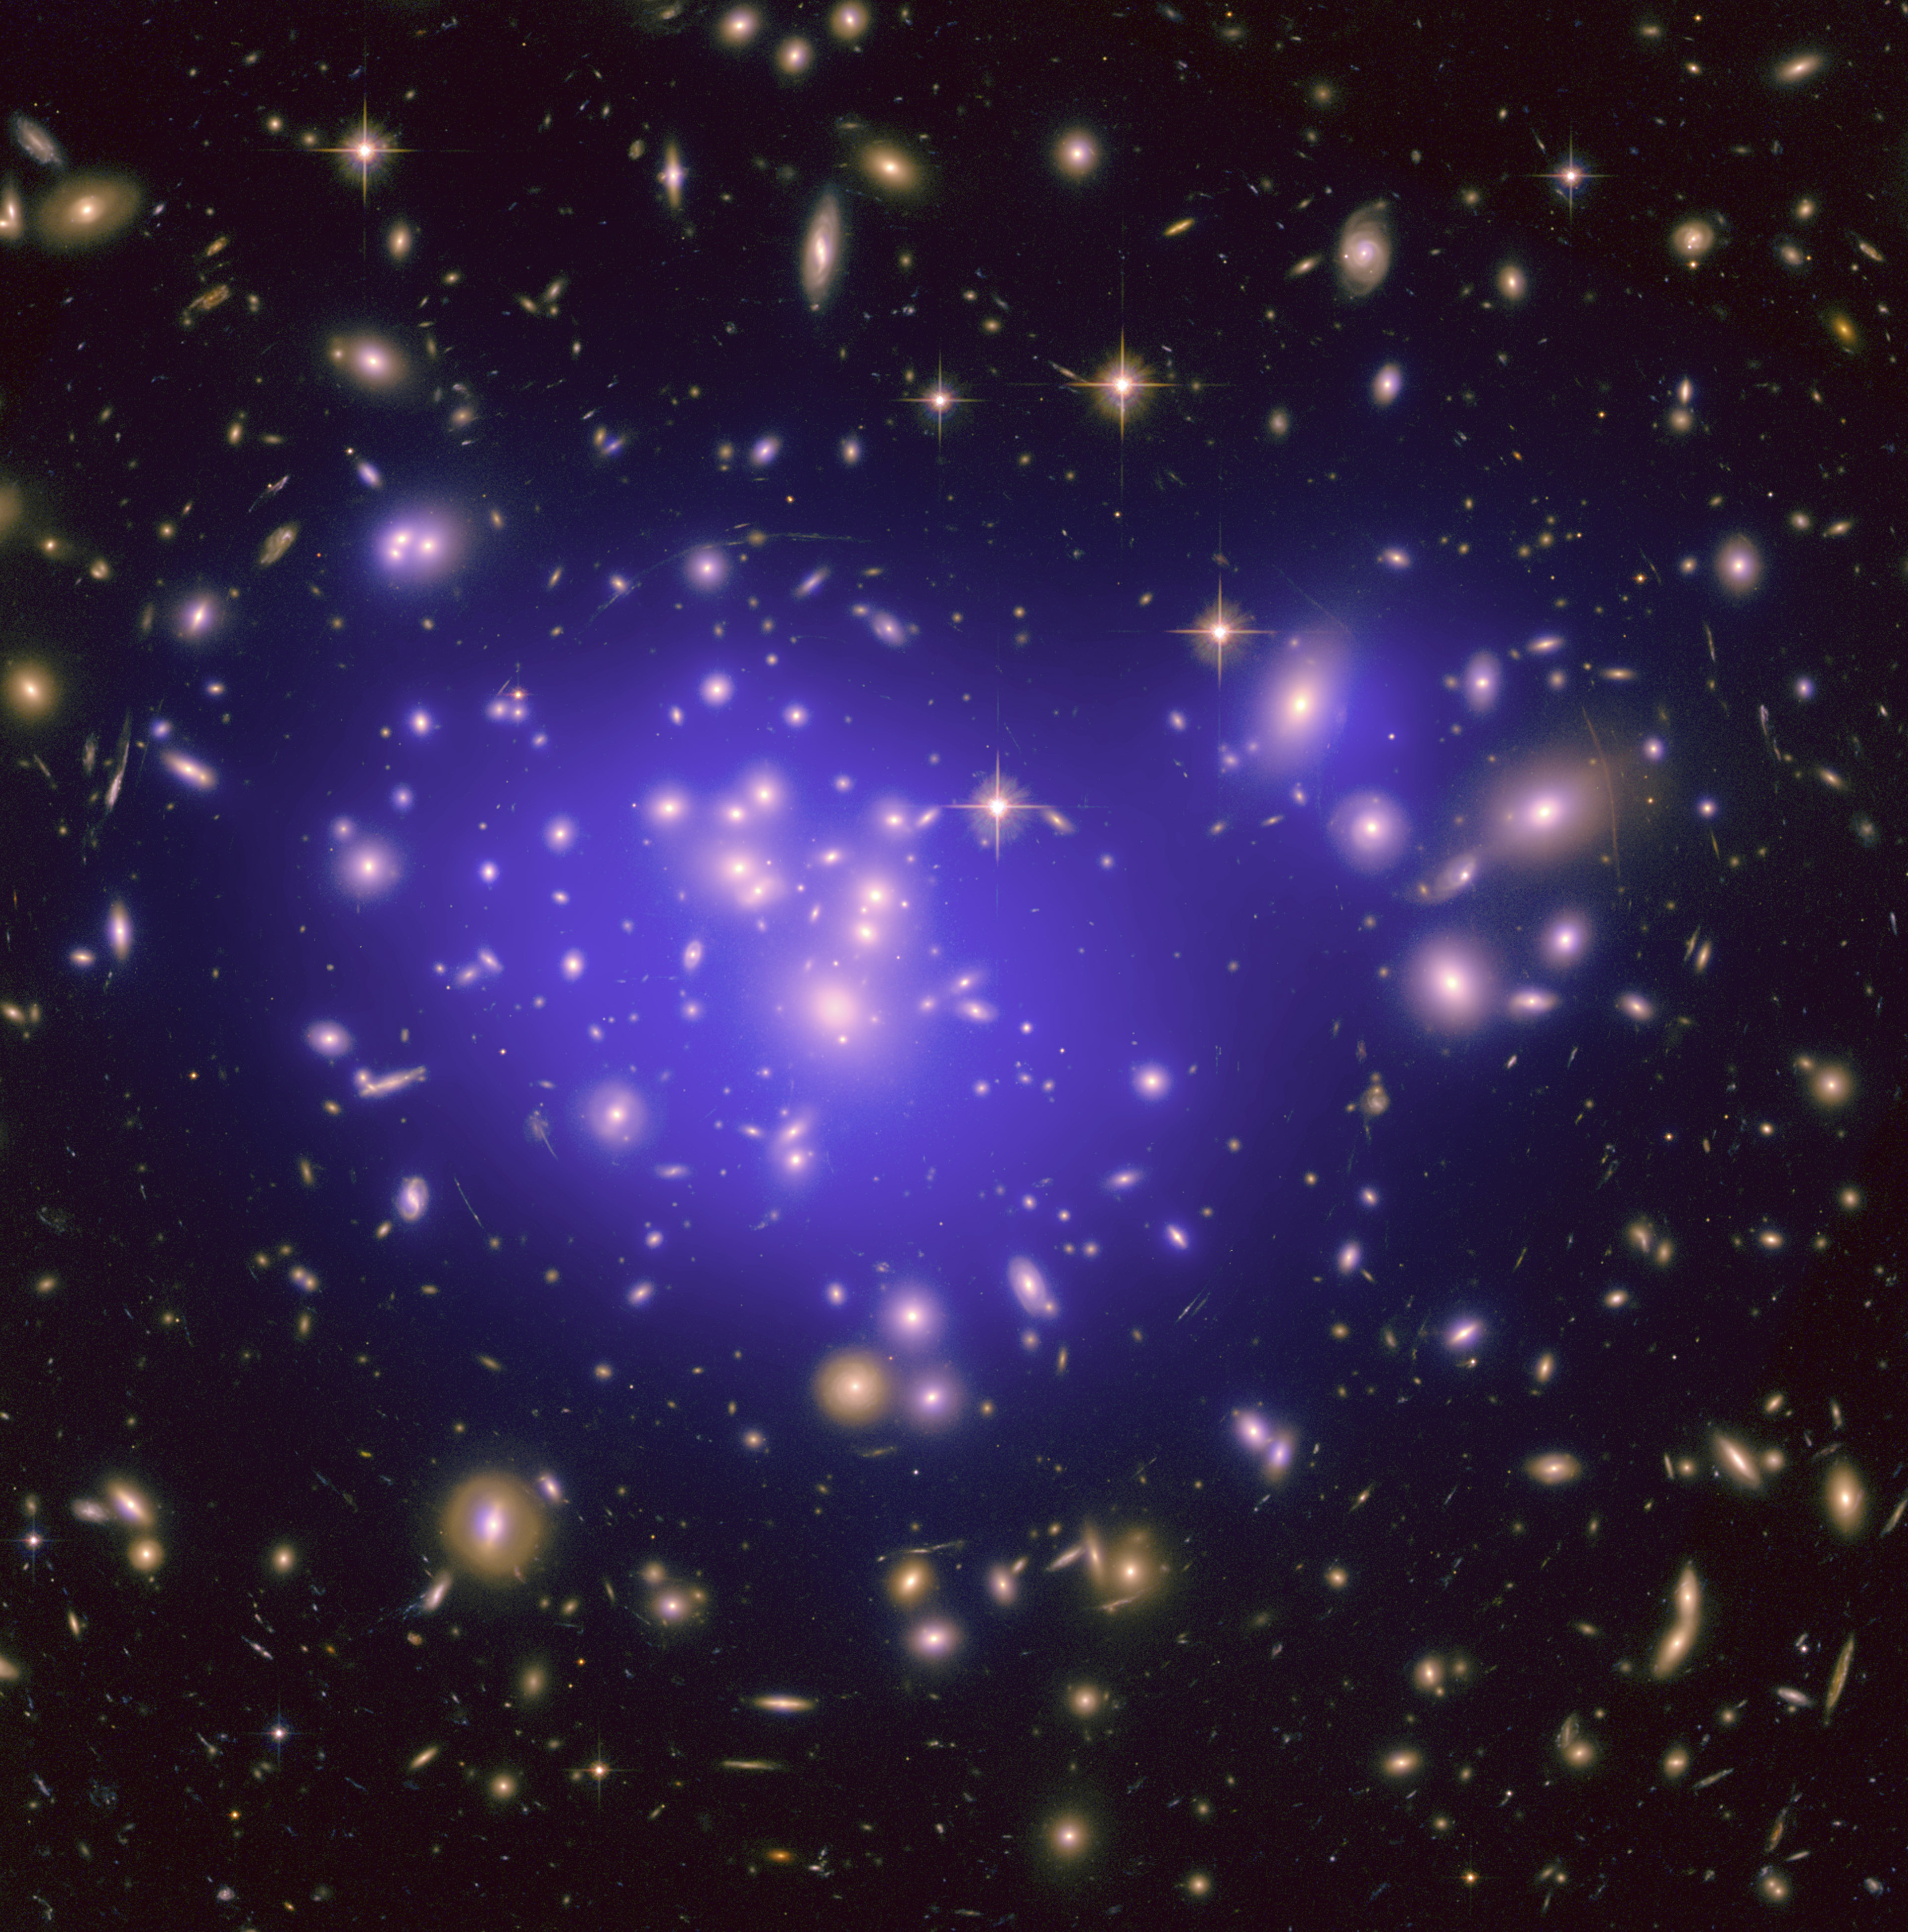 Galaxy Cluster Abell 1689, NASA image